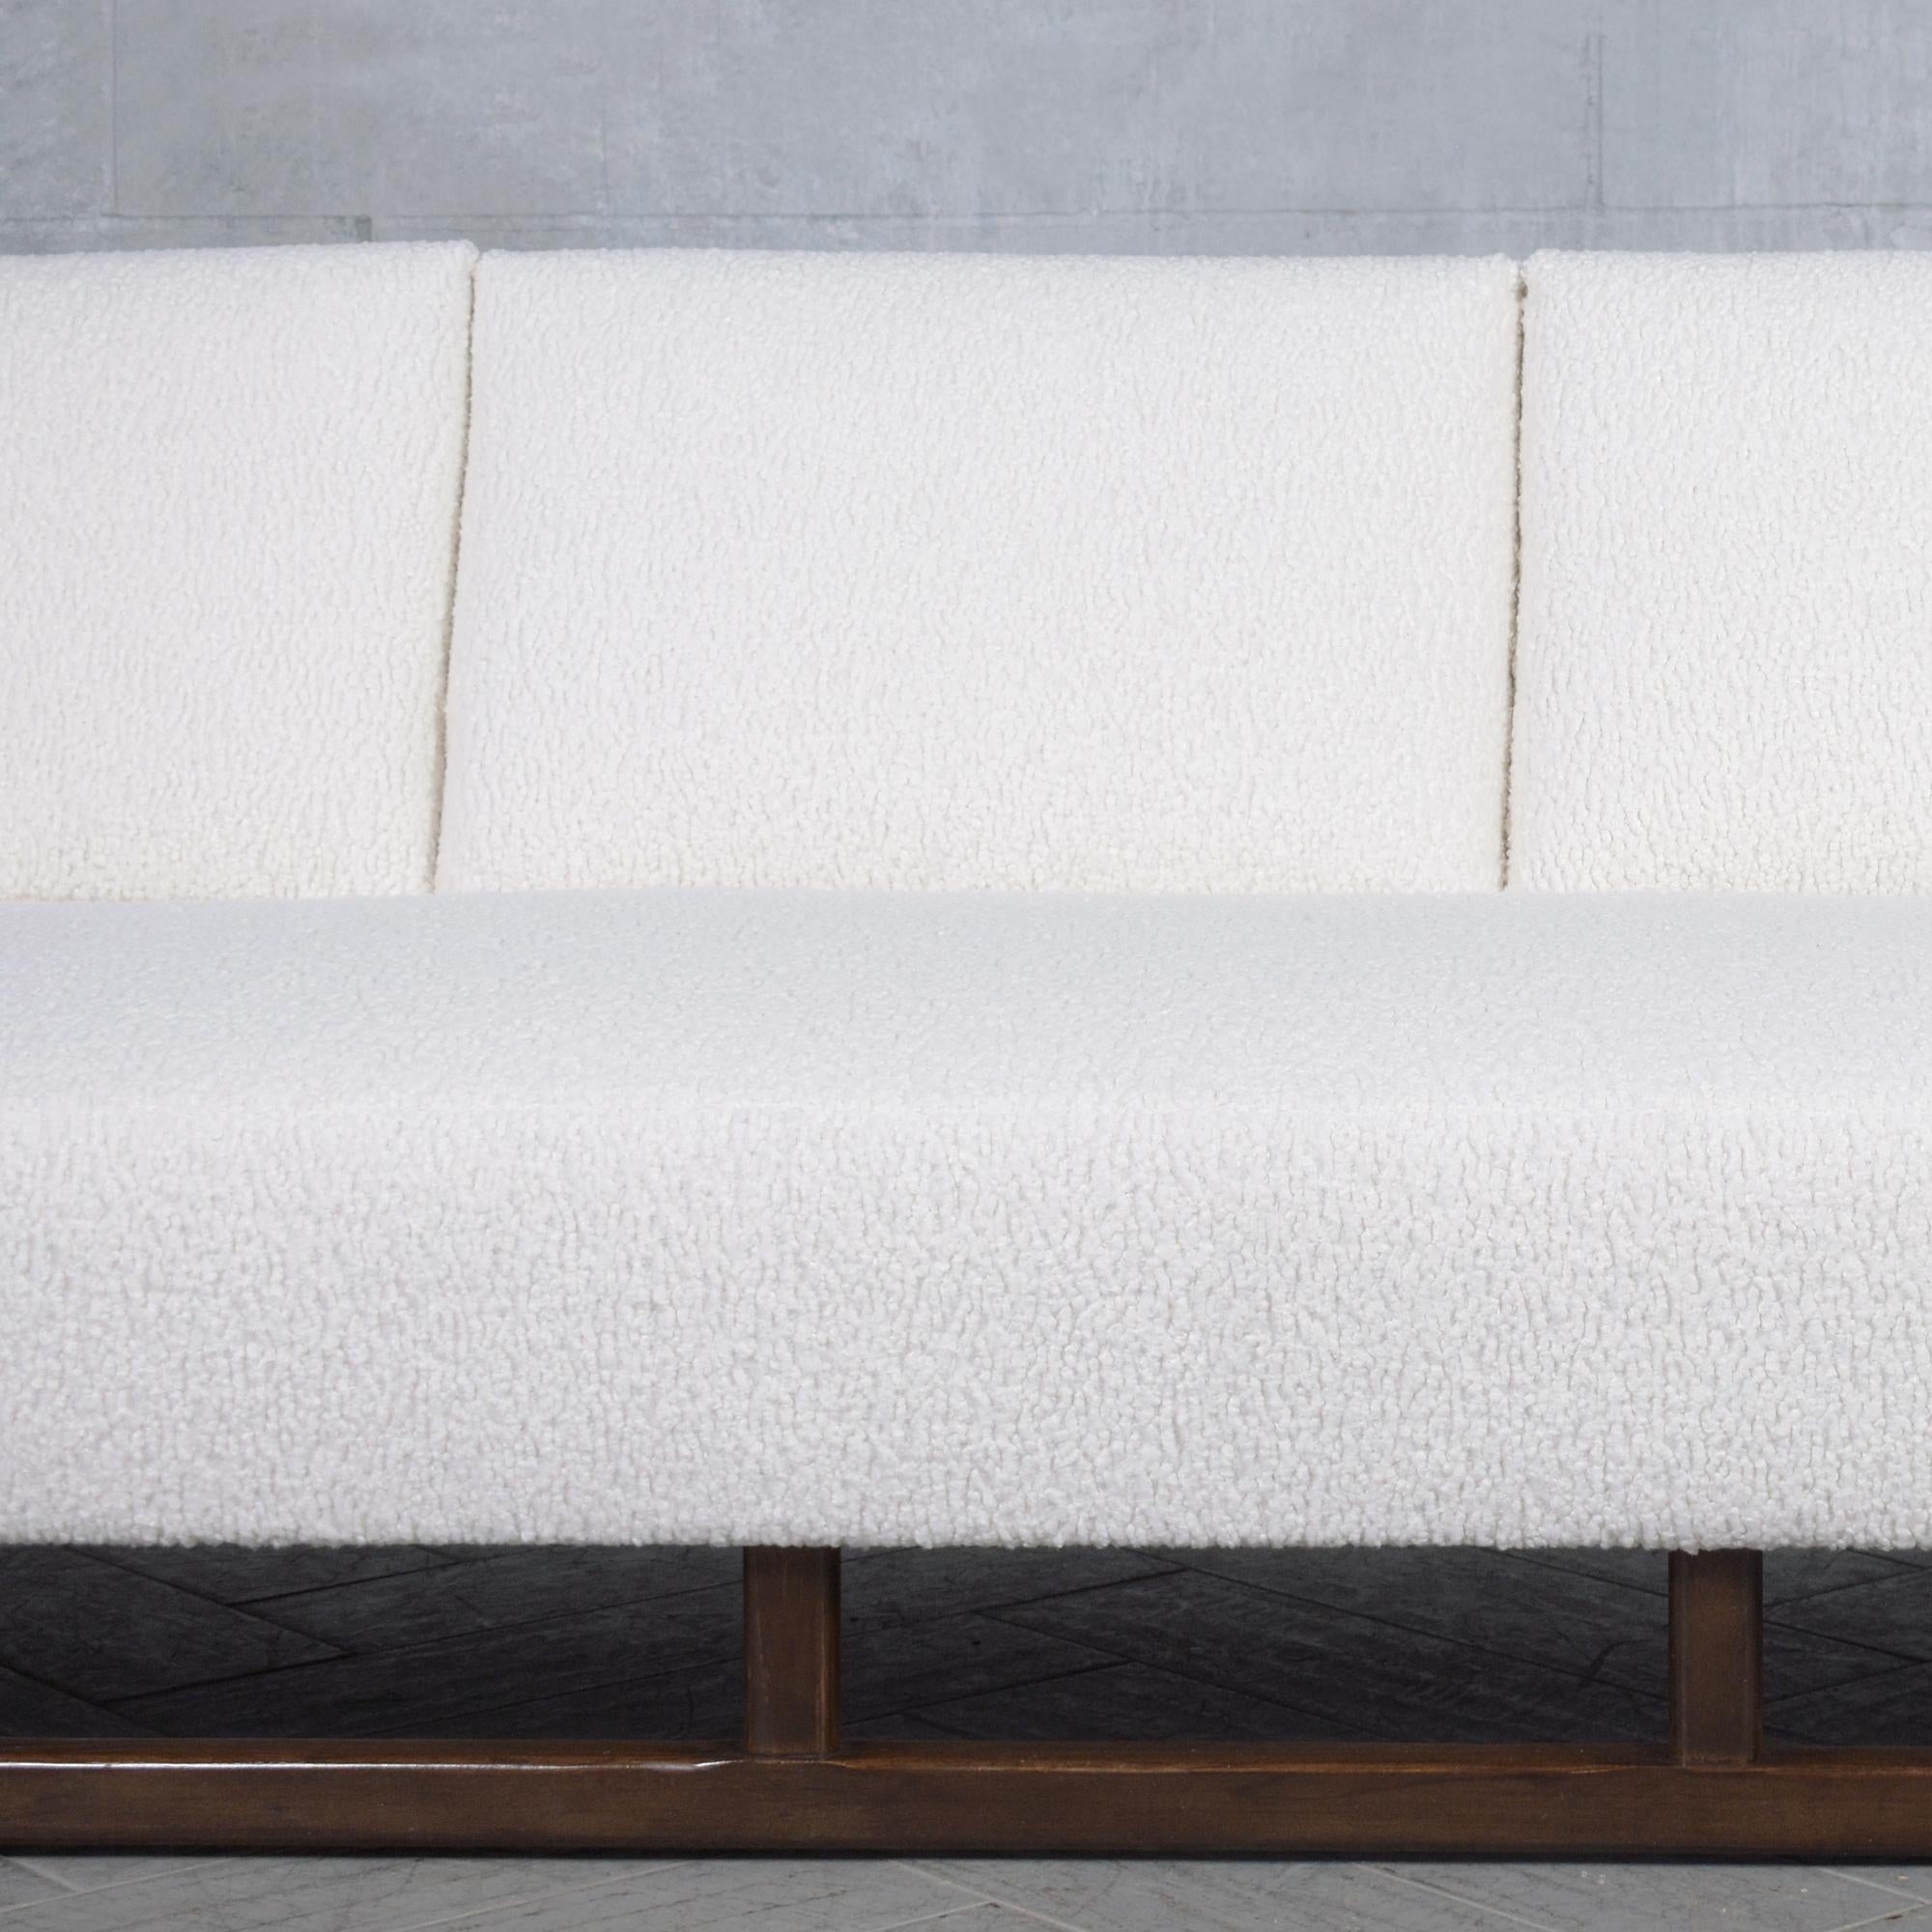 American Vintage Mid-Century Sofa Restored: Classic Design Meets Modern Comfort